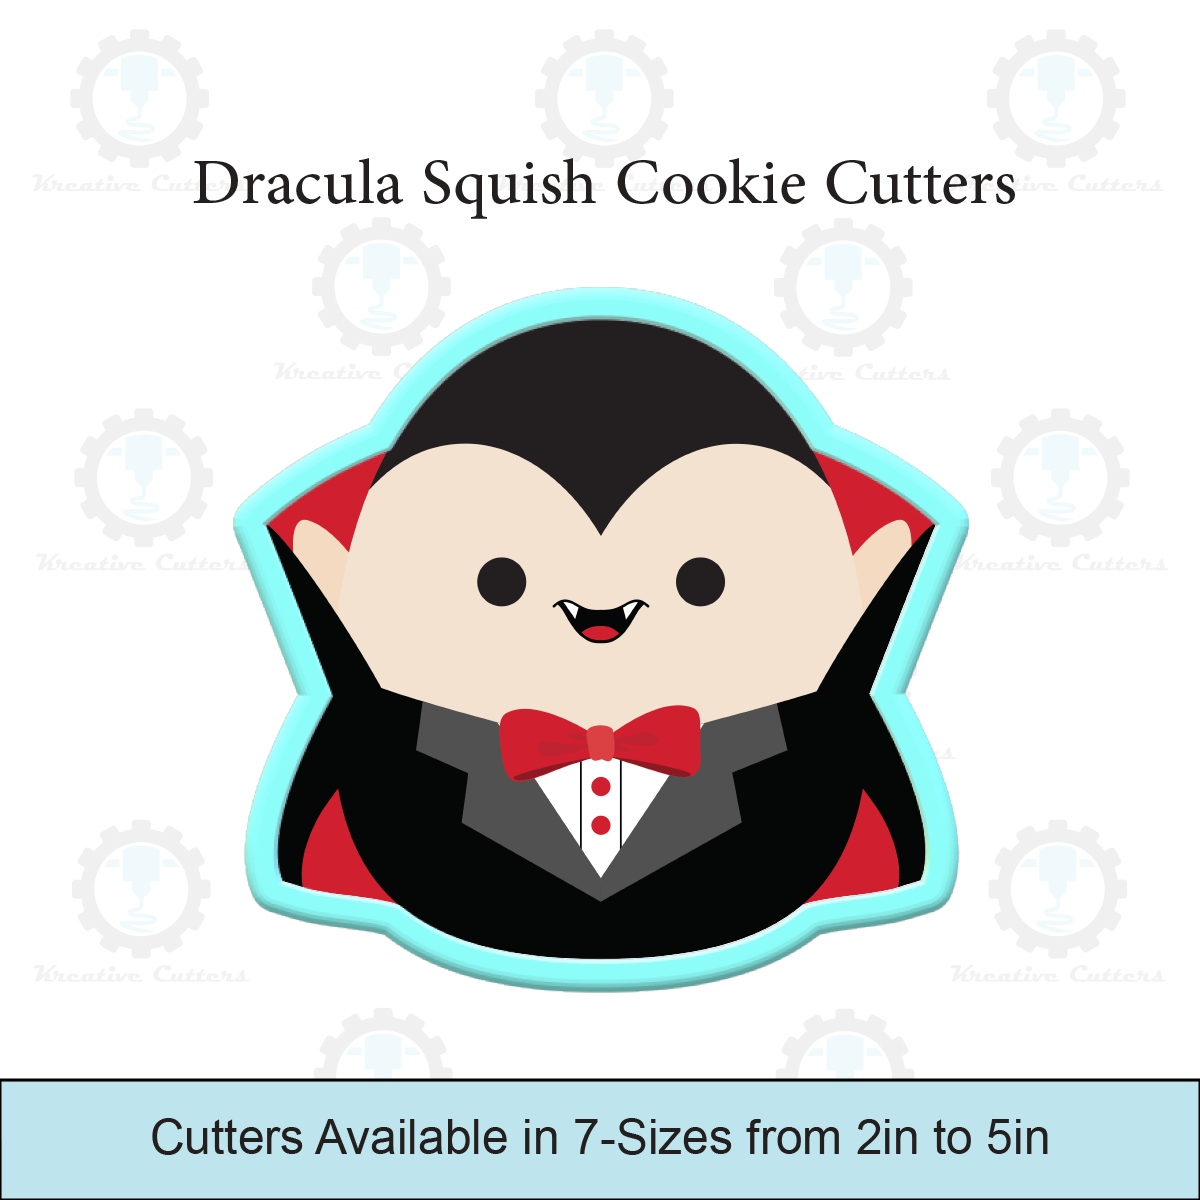 Dracula Squish Cookie Cutters